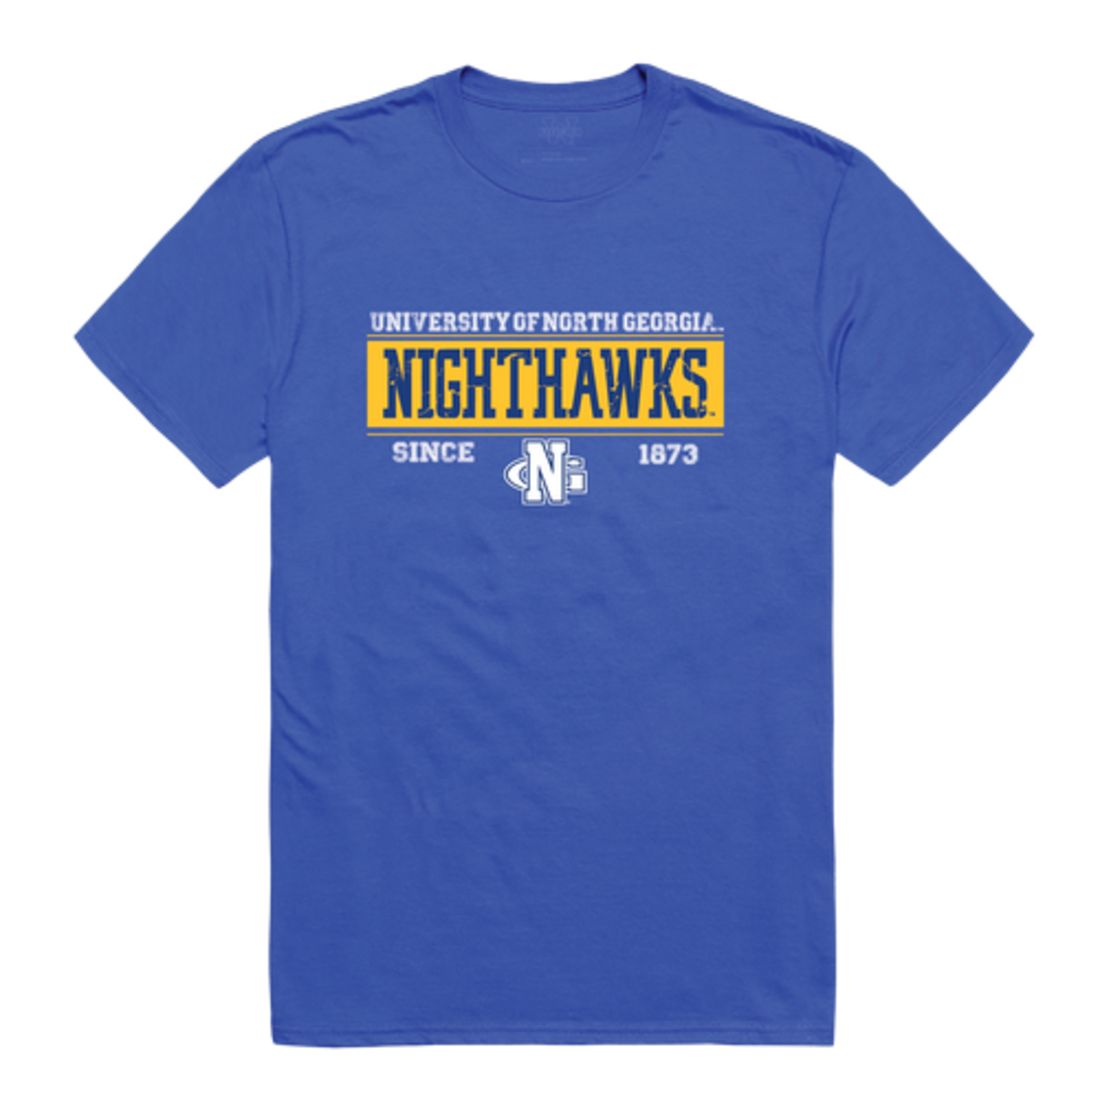 University of North Georgia Nighthawks Established T-Shirt